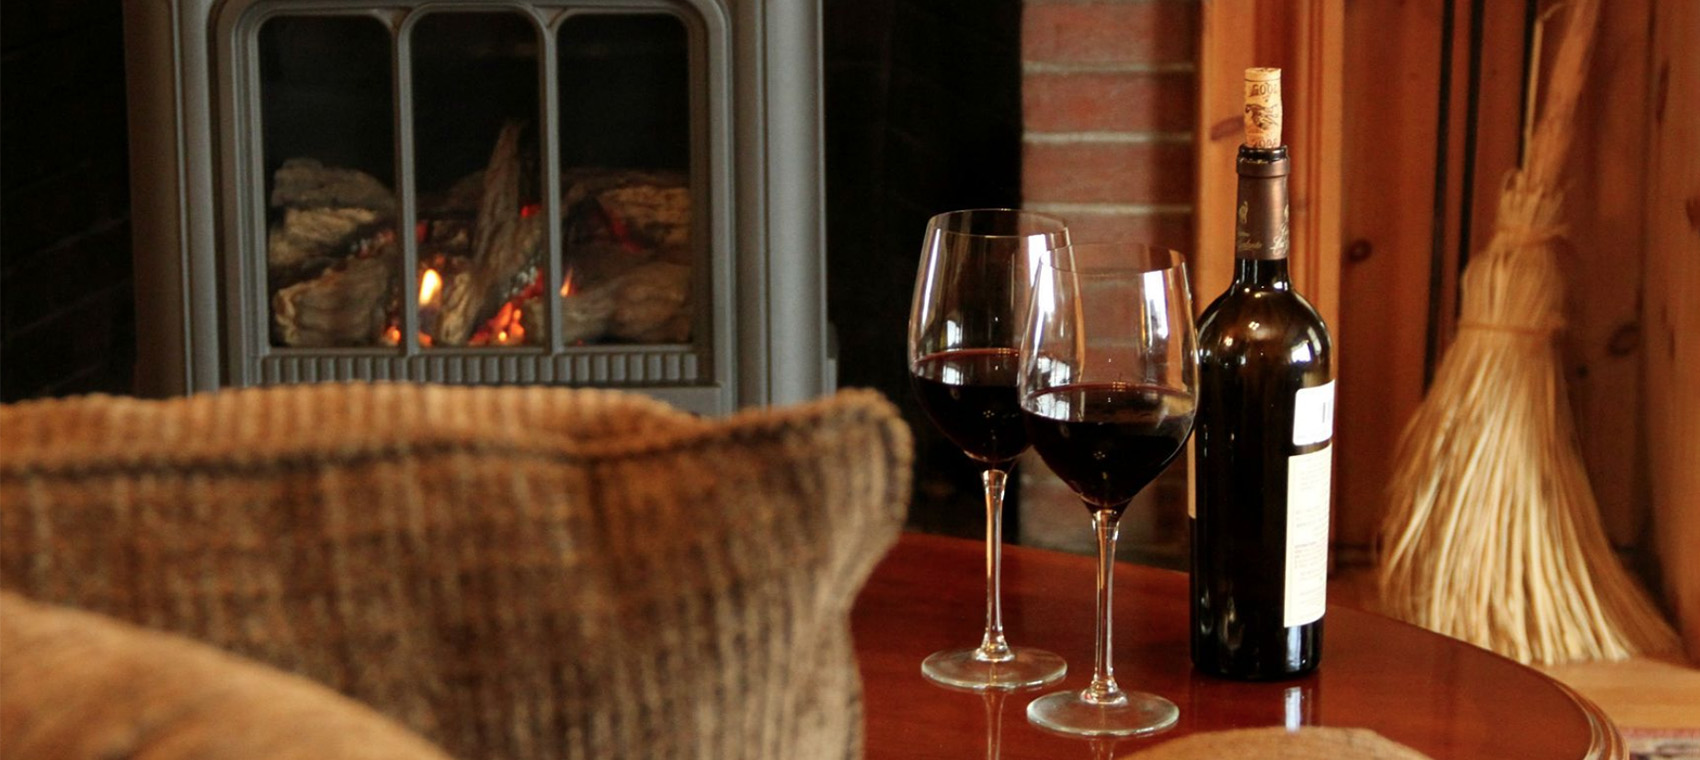 wine by fireplace